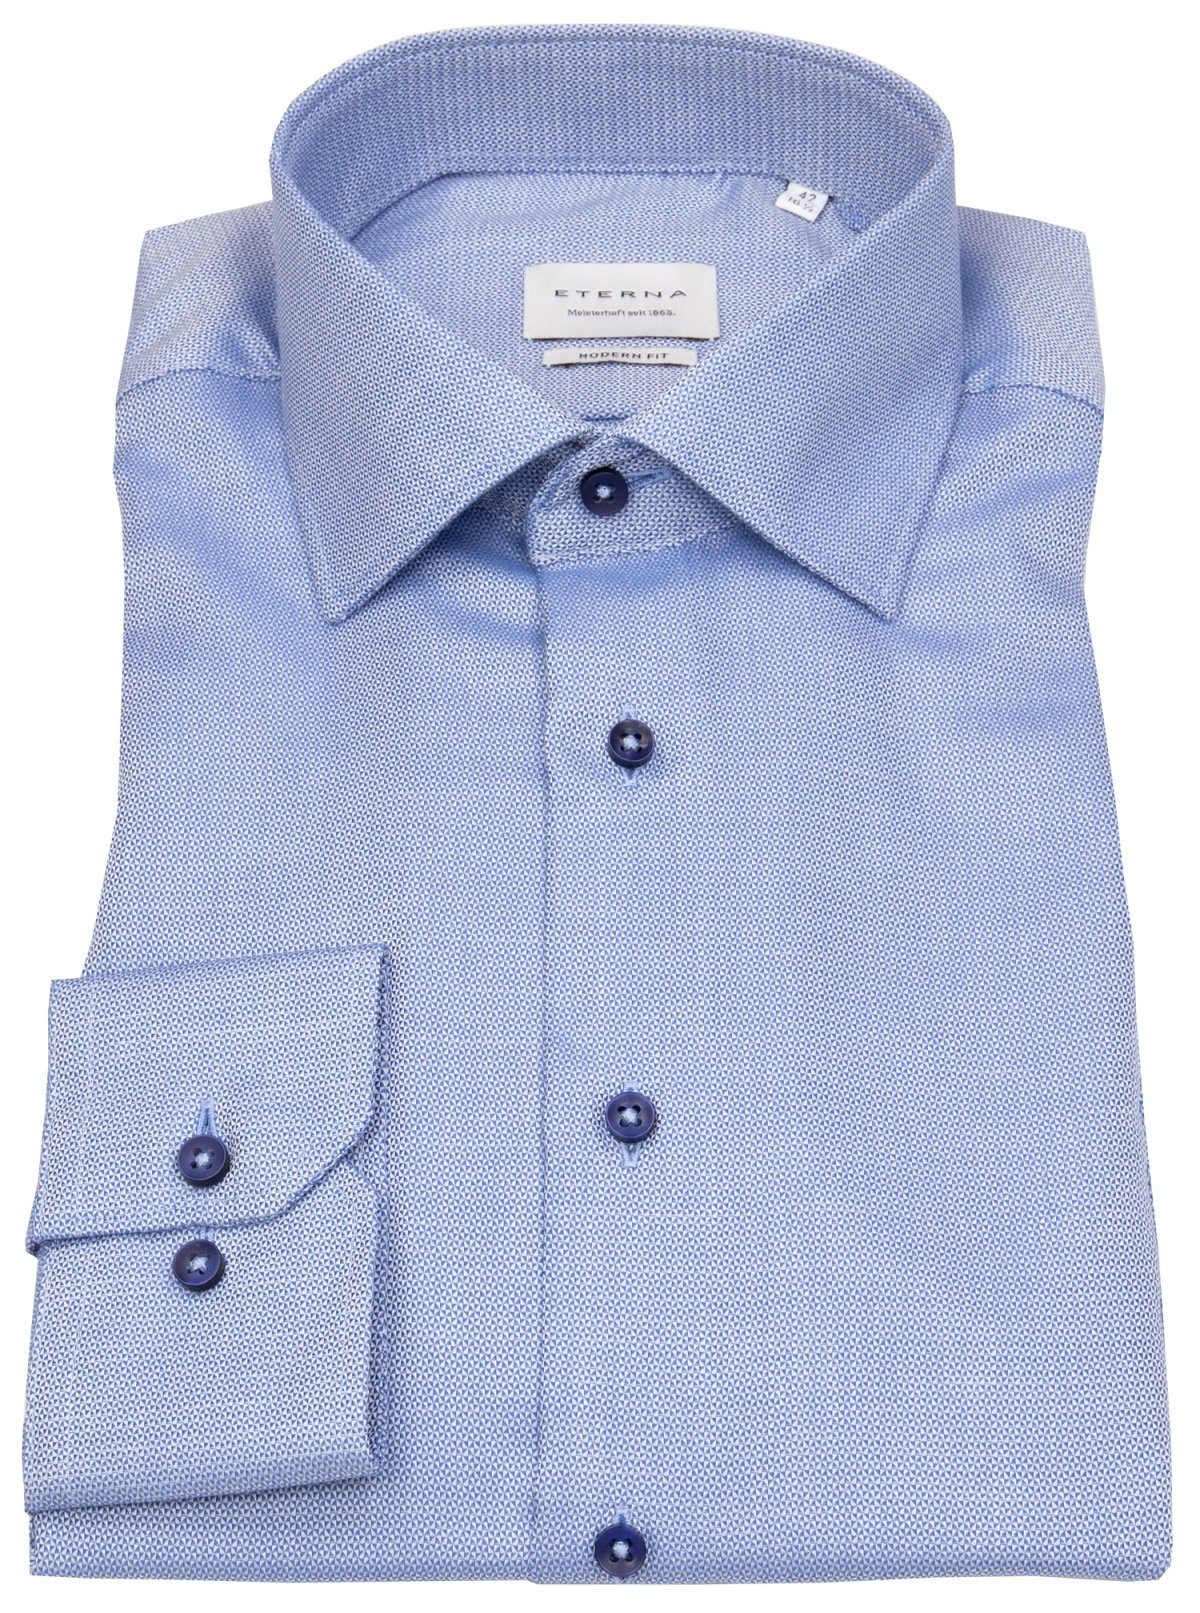 Eterna Businesshemd Modern Fit leicht tailliert bügelfrei Kentkragen 14 blau | Klassische Hemden